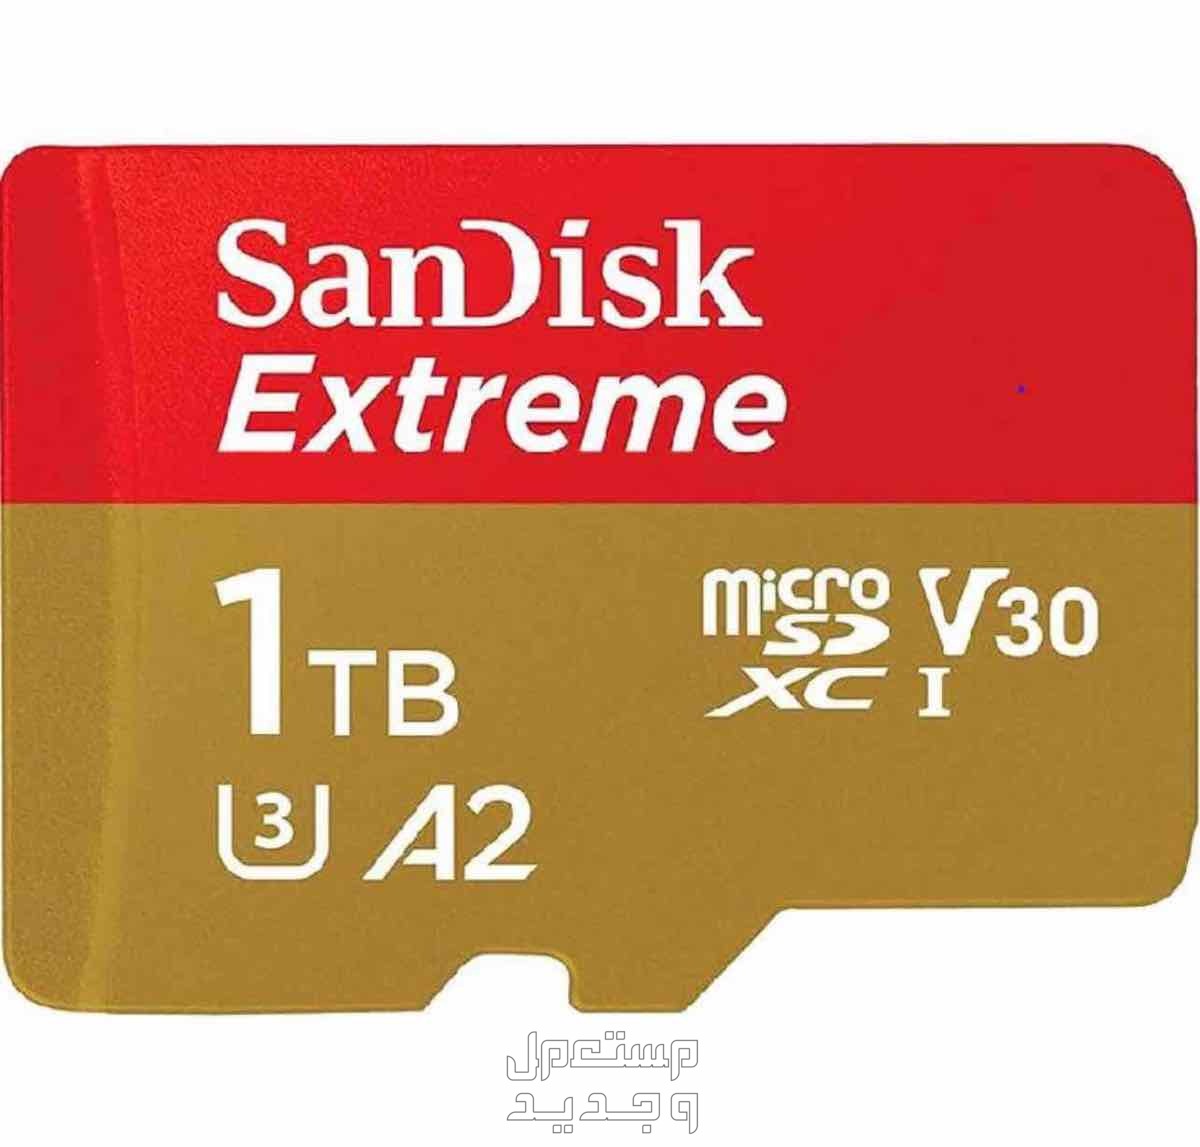 sandisk extreme 1tb sd card ميموري ساندسك ذاكرة 1 تيرا في جدة بسعر 350 ريال سعودي